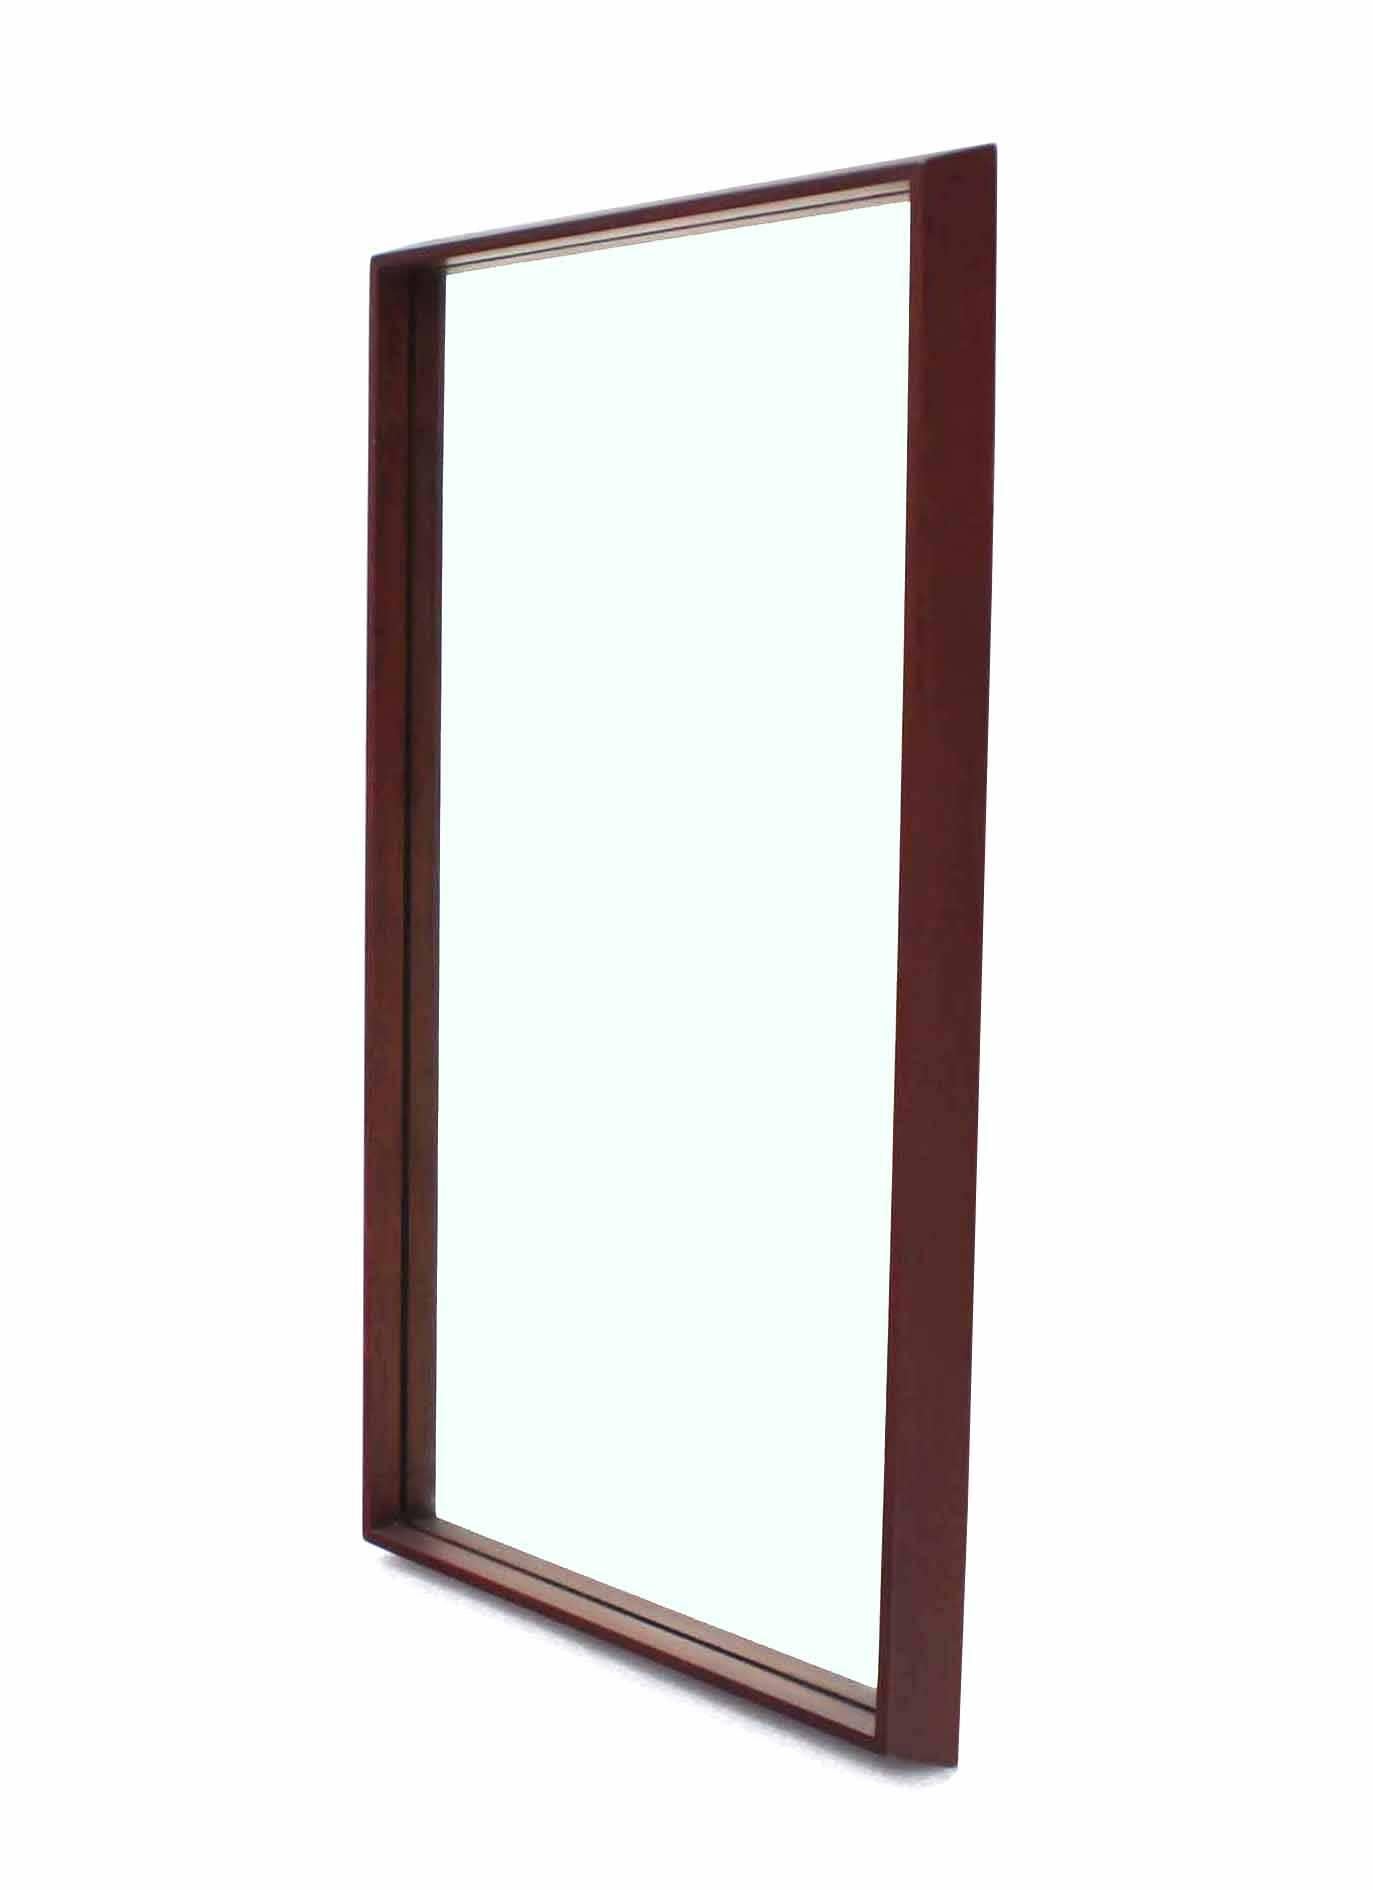 Very nice walnut frame Mid-Century Modern rectangular mirror.